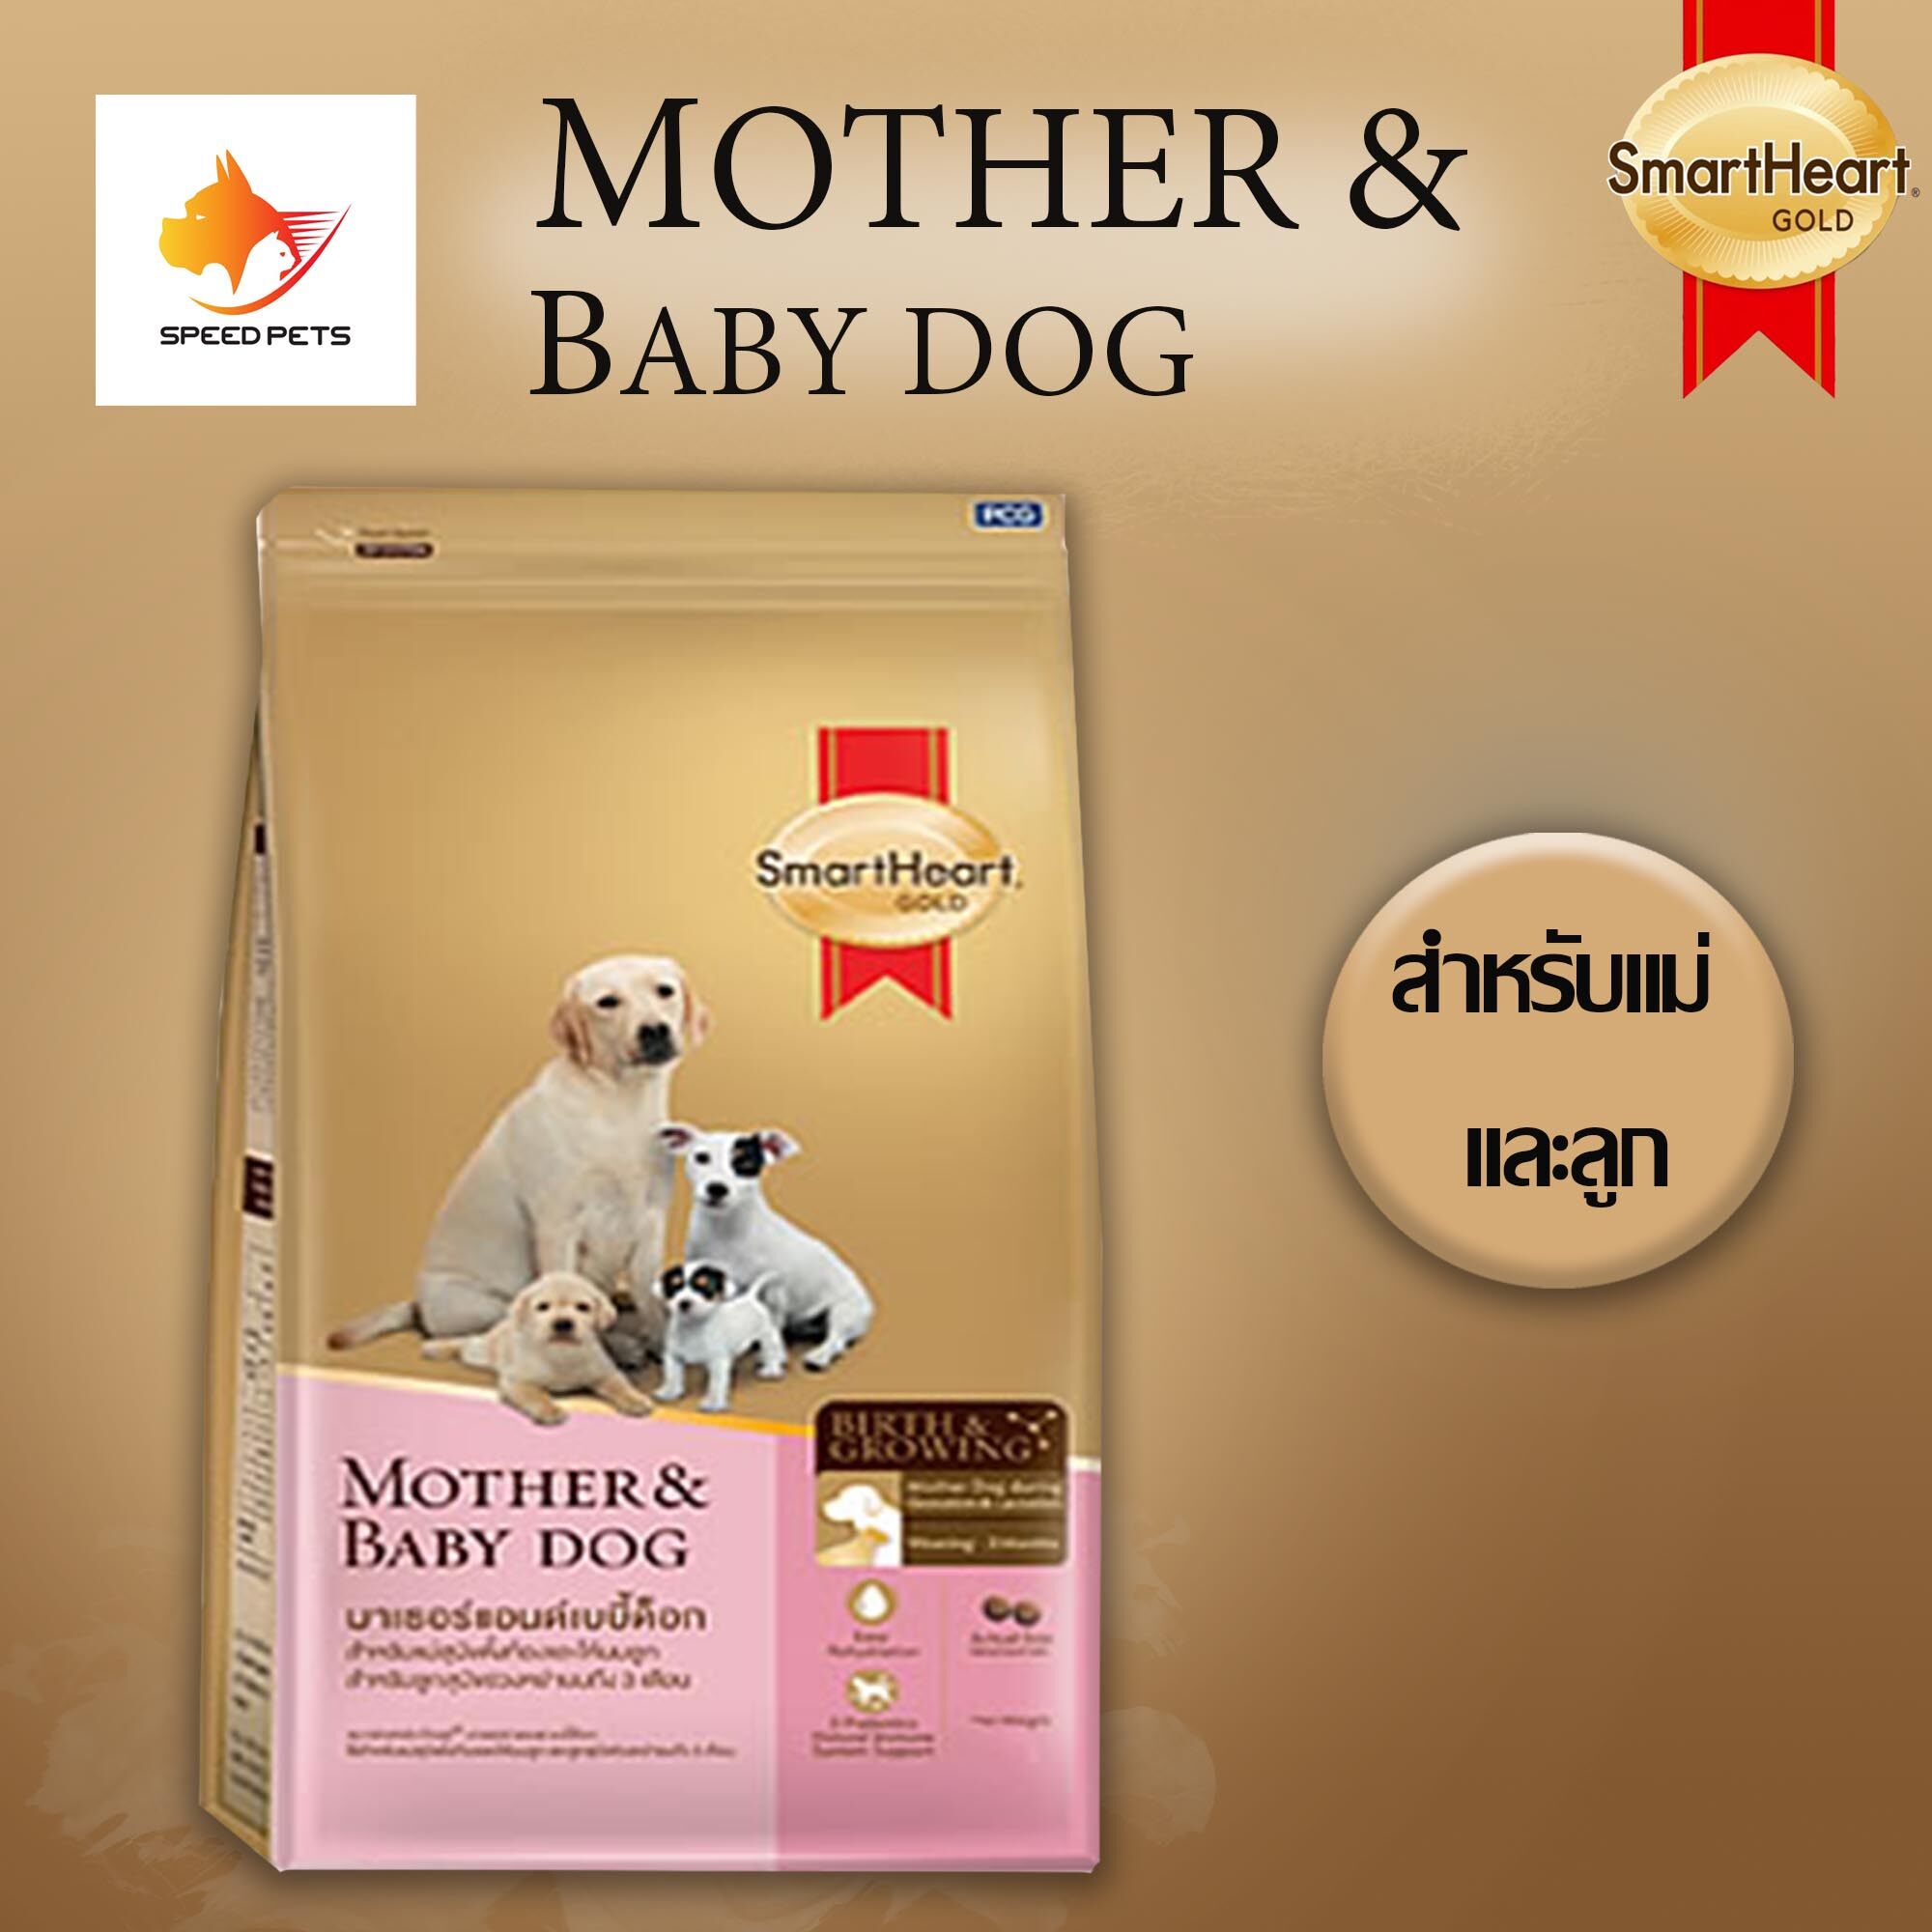 Smartheart Gold mother & babydog อาหารลูกสุนัข แม่สุนัข ตั้งท้อง และให้นมลูก โกลด์